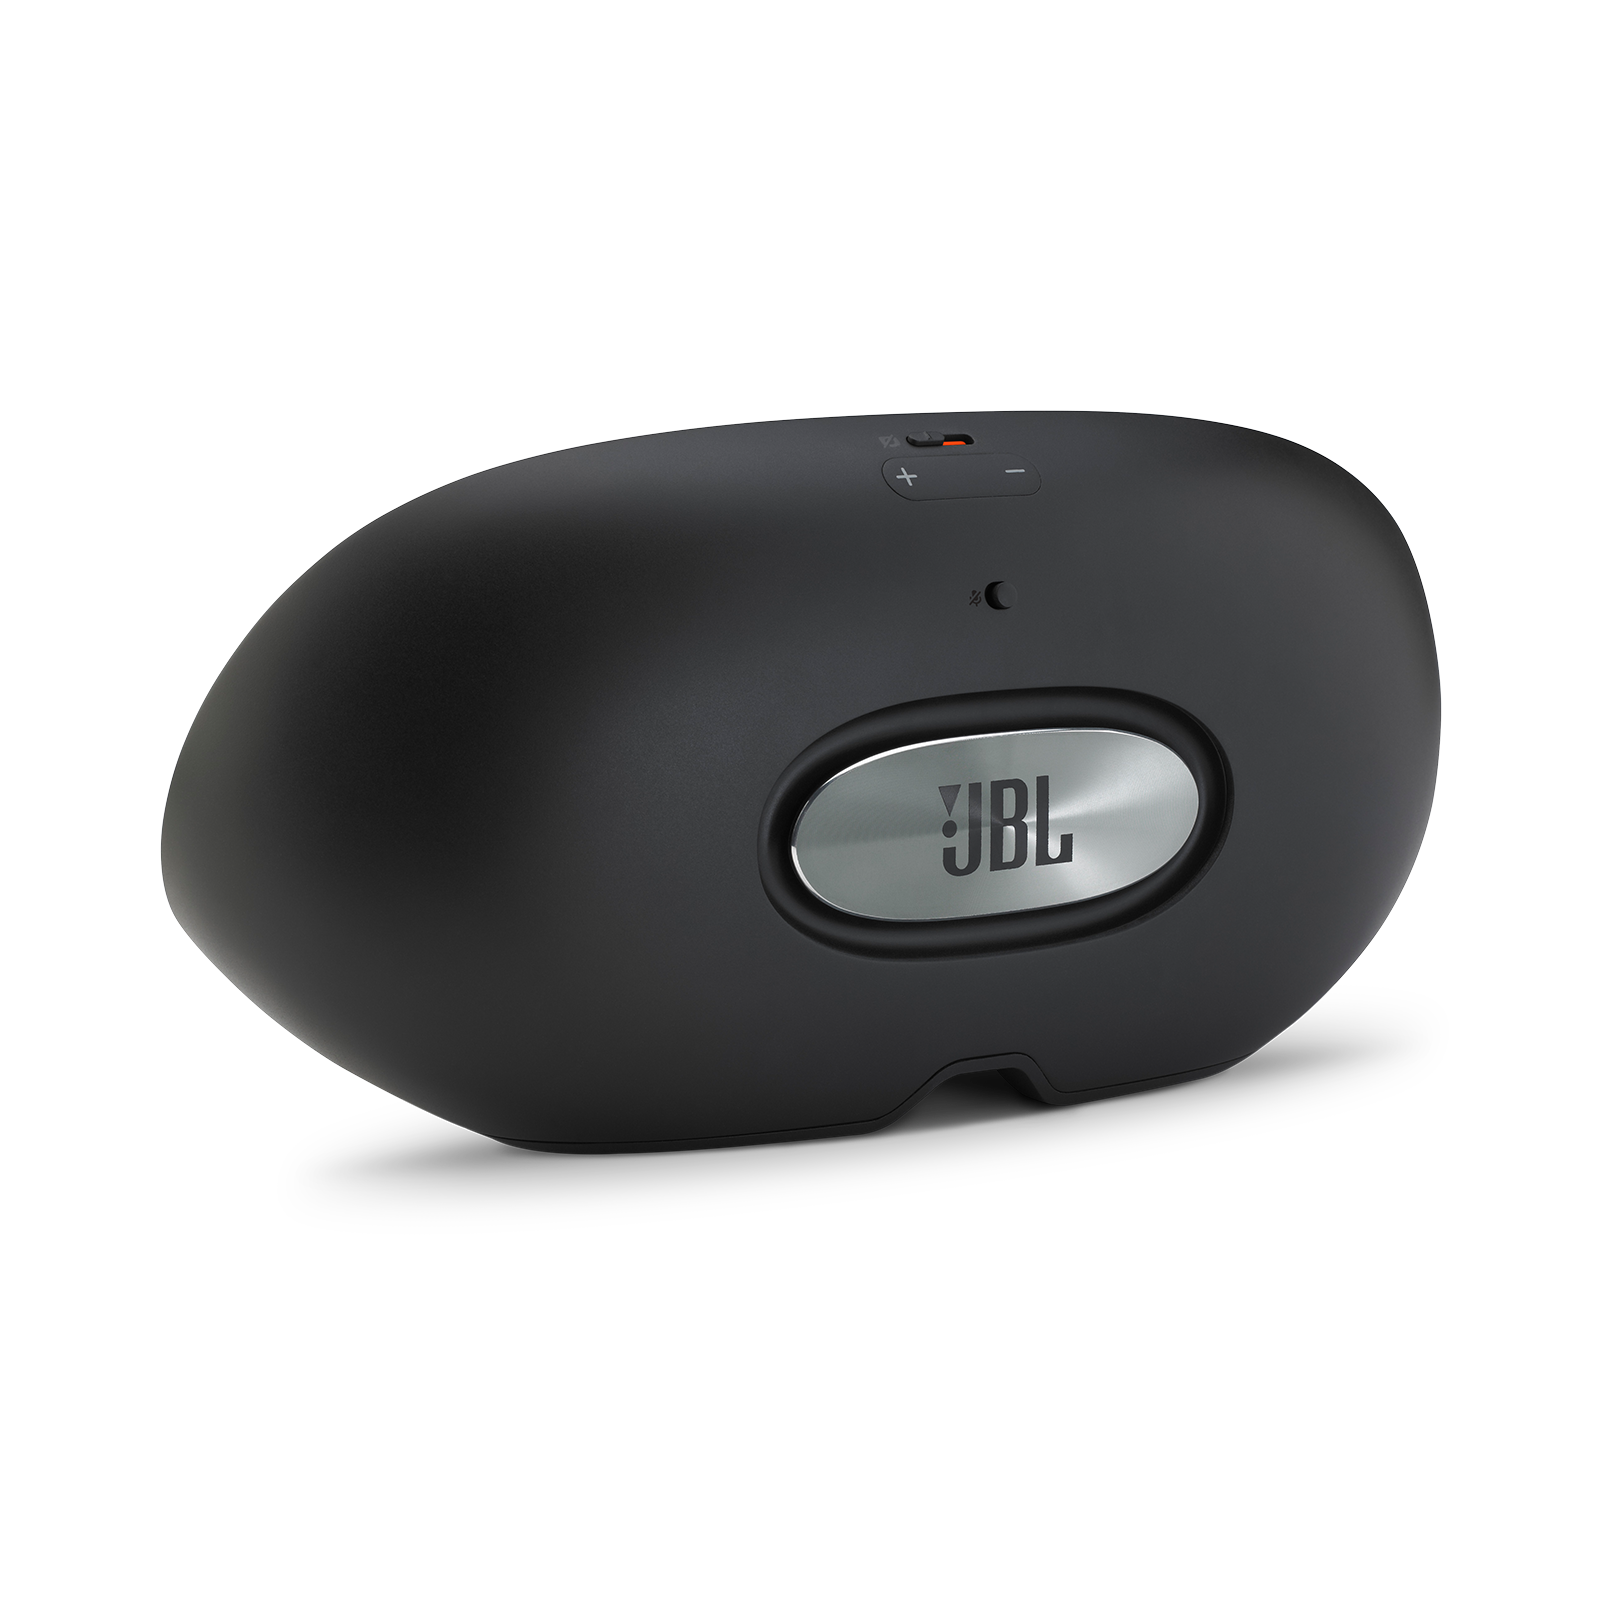 JBL LINK VIEW - Black - JBL legendary sound in a Smart Display with the Google Assistant. - Detailshot 1